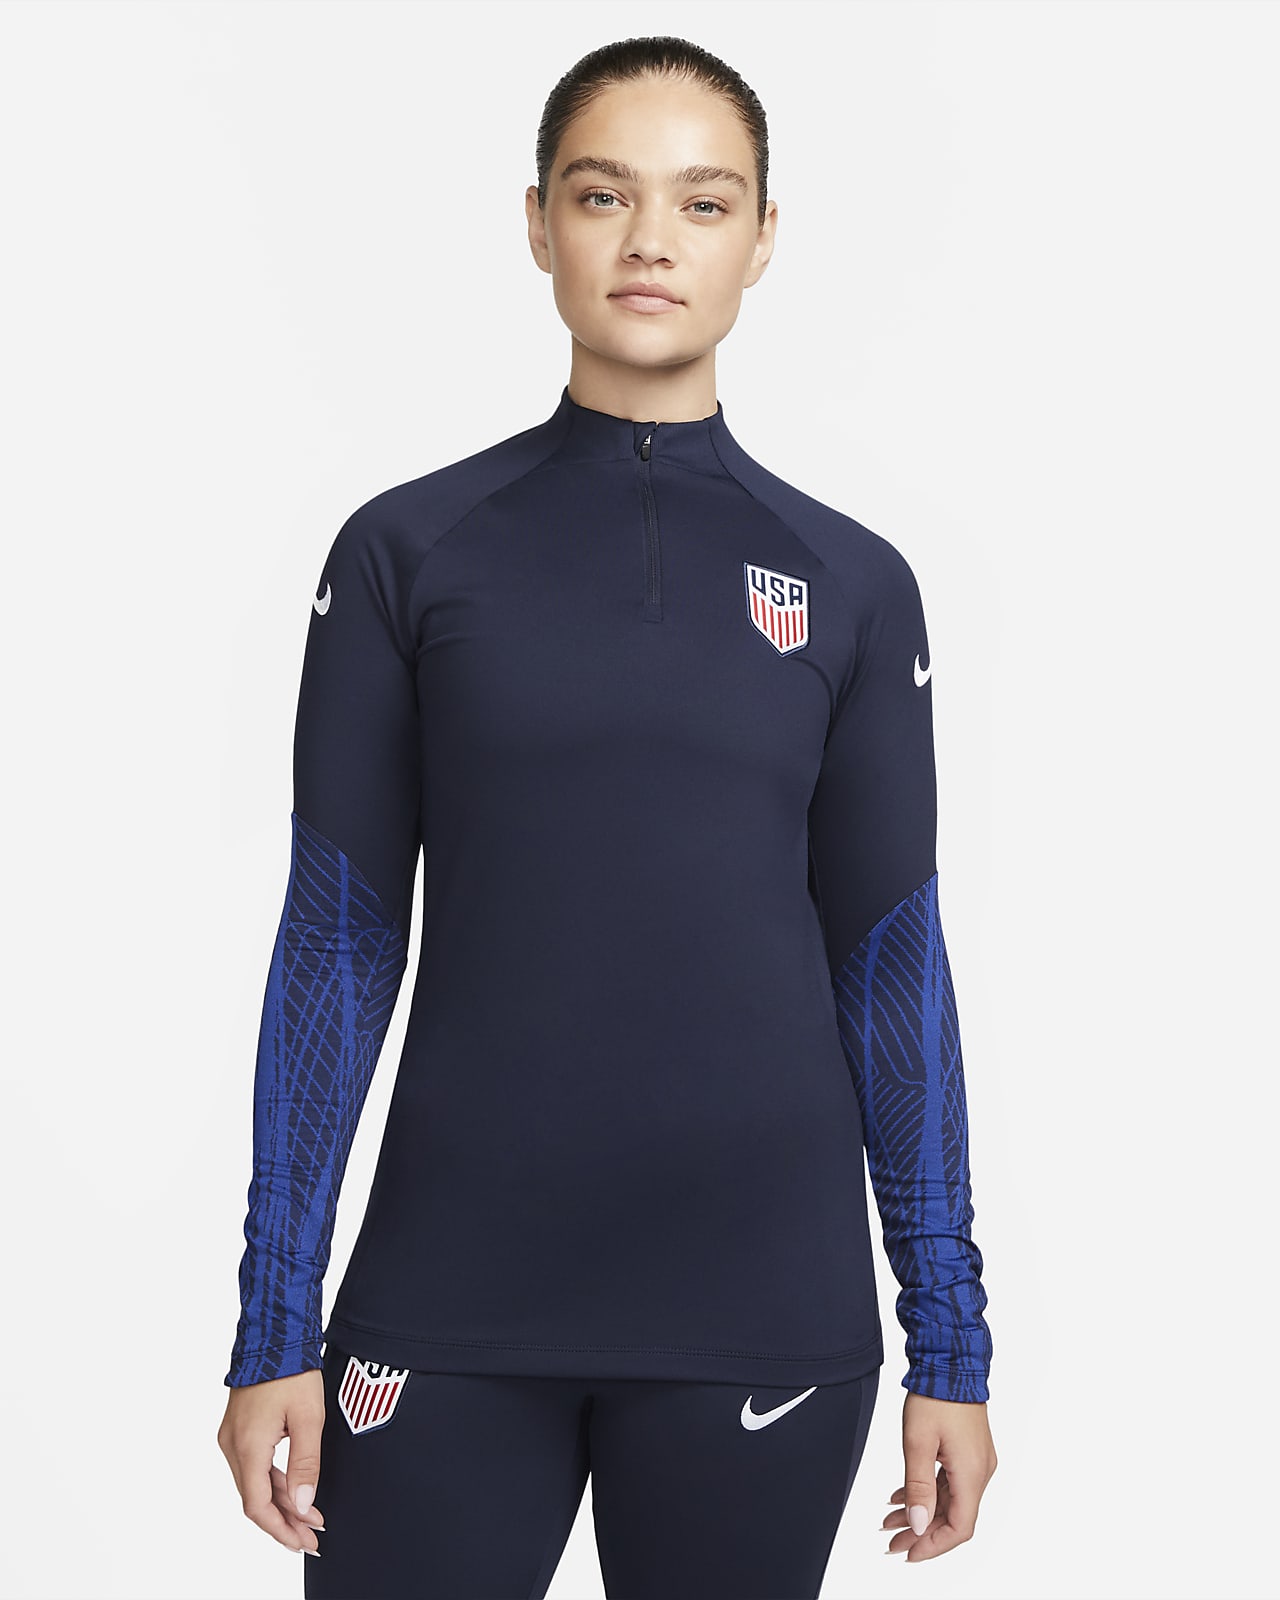 U.S. Strike Women's Nike Dri-FIT Knit Soccer Pants.